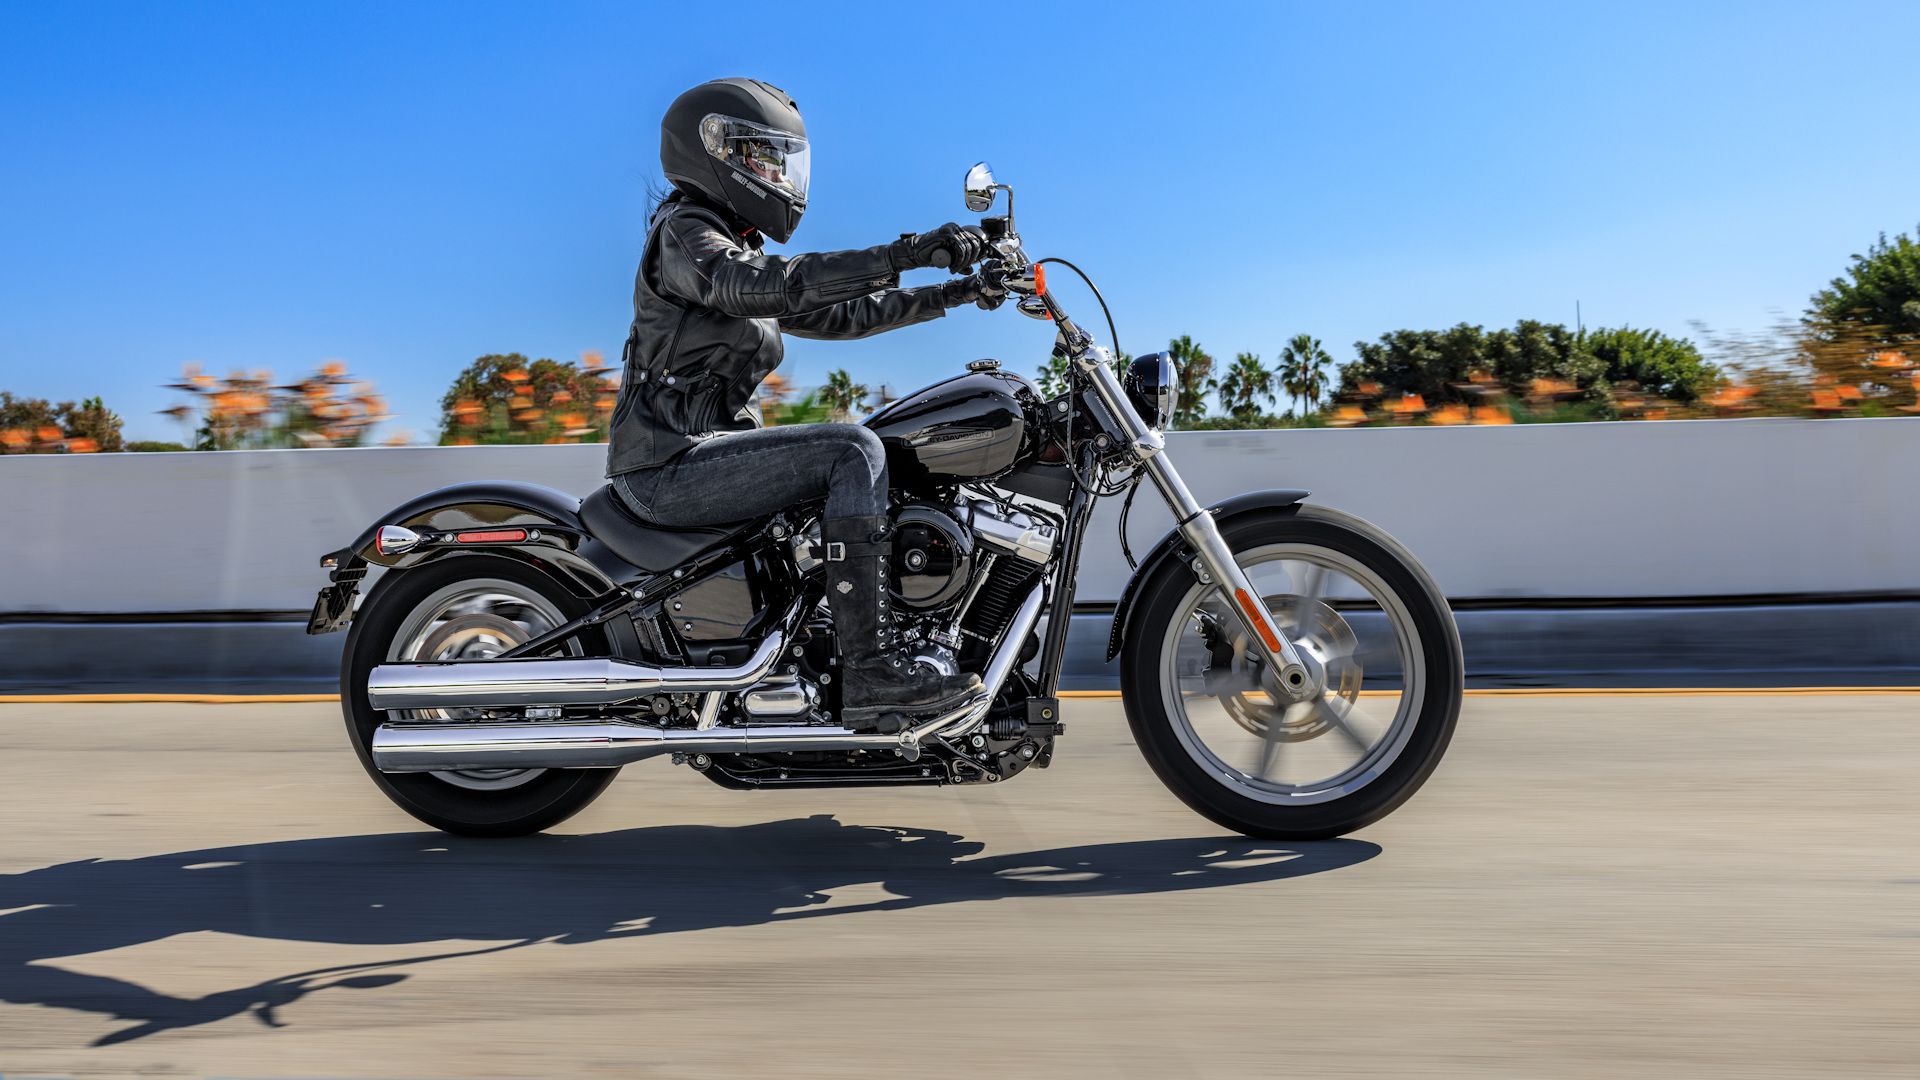 2023 Harley Davidson Softail Standard Performance, Price, And Photos